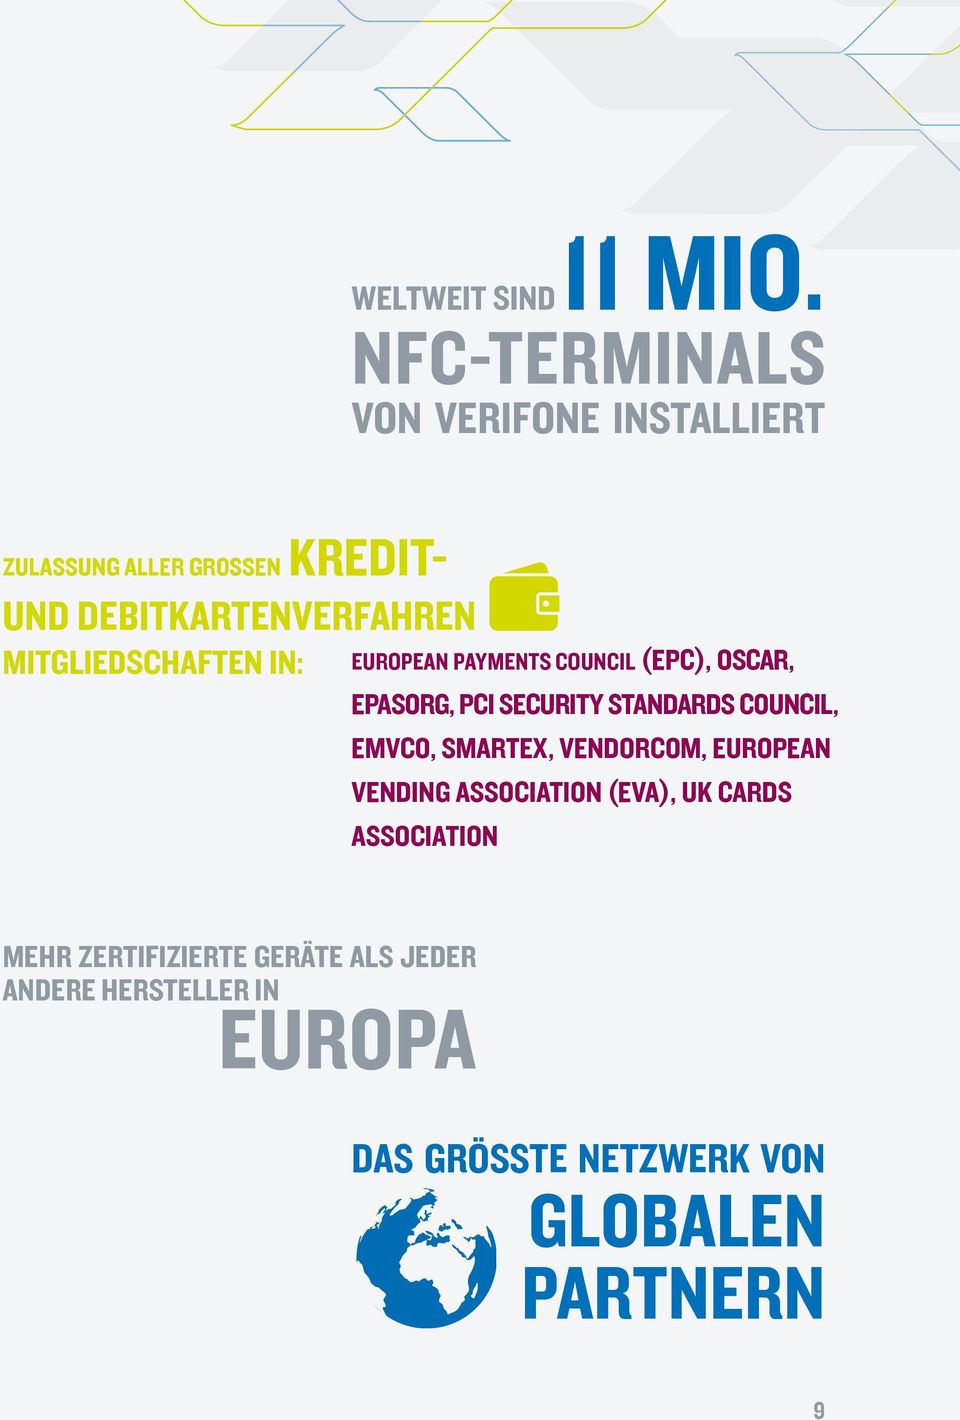 MITGLIEDSCHAFTEN IN: EUROPEAN PAYMENTS COUNCIL (EPC), OSCAR, EPASORG, PCI SECURITY STANDARDS COUNCIL,